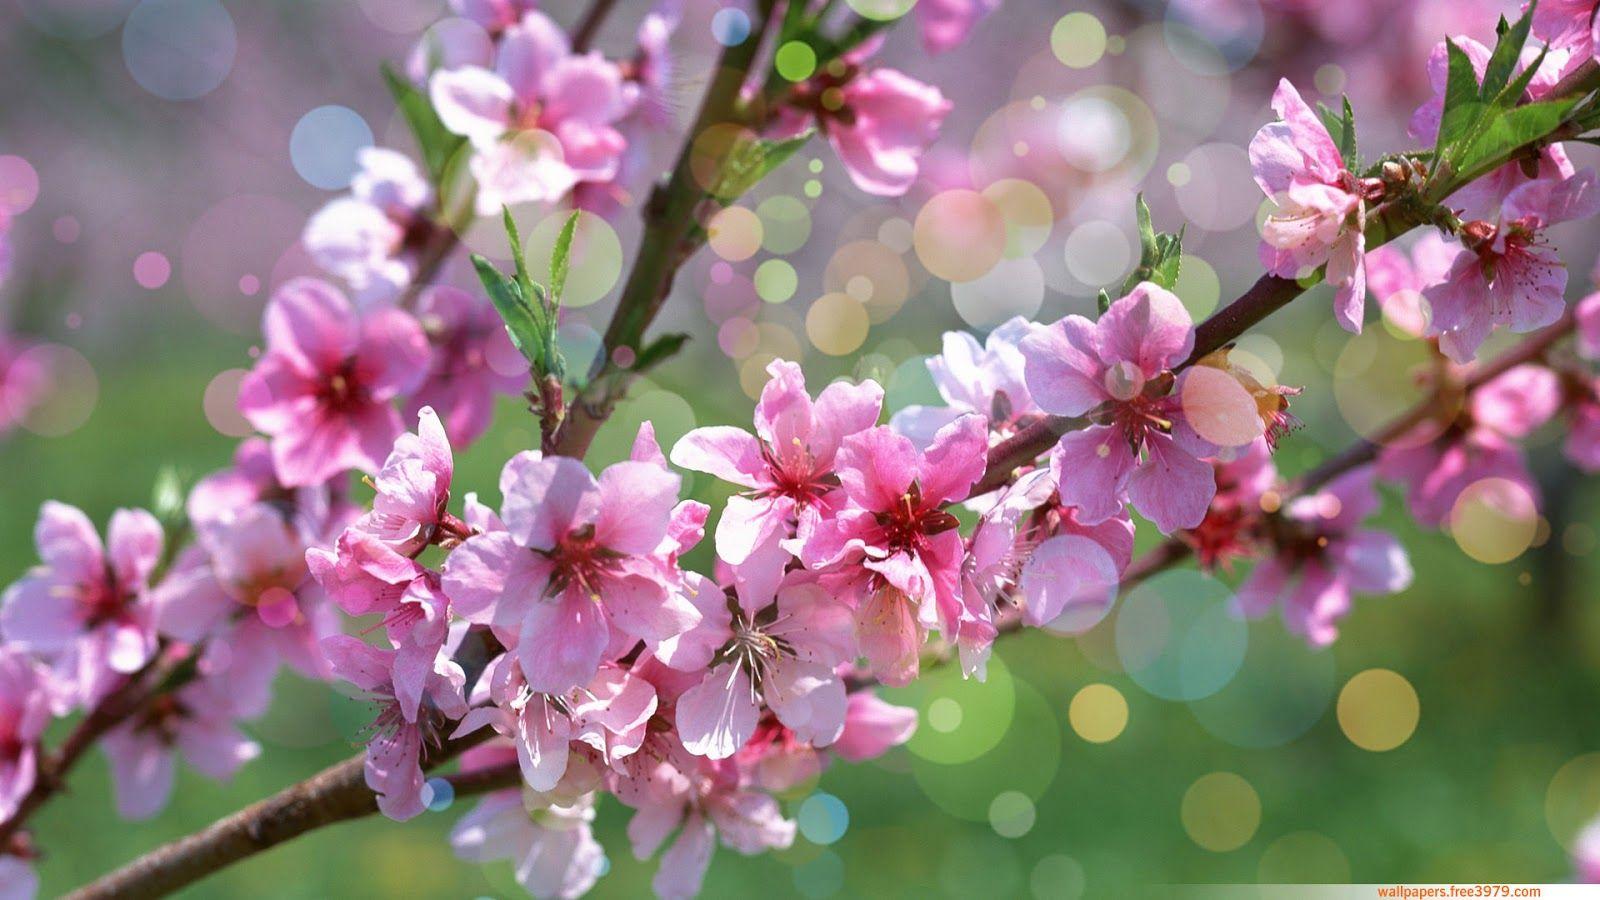 Hình nền 1600x900: Cherry Blossoms Flower Cherry Wallpaper